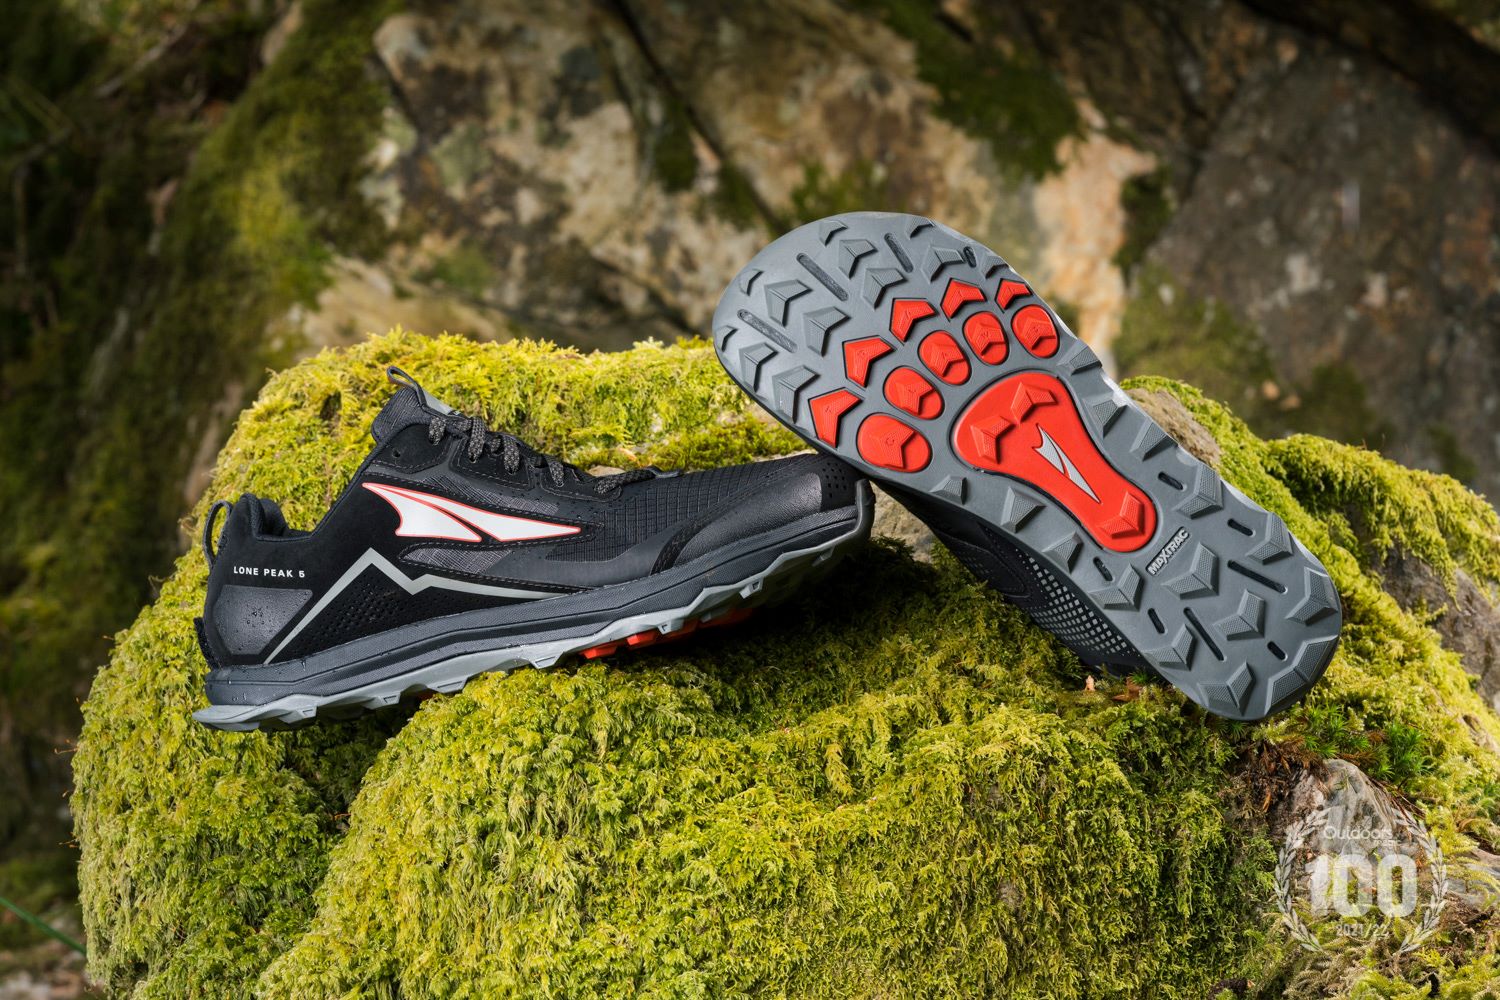 Altra - Lone Peak 5.0 - Trail Shoe Review